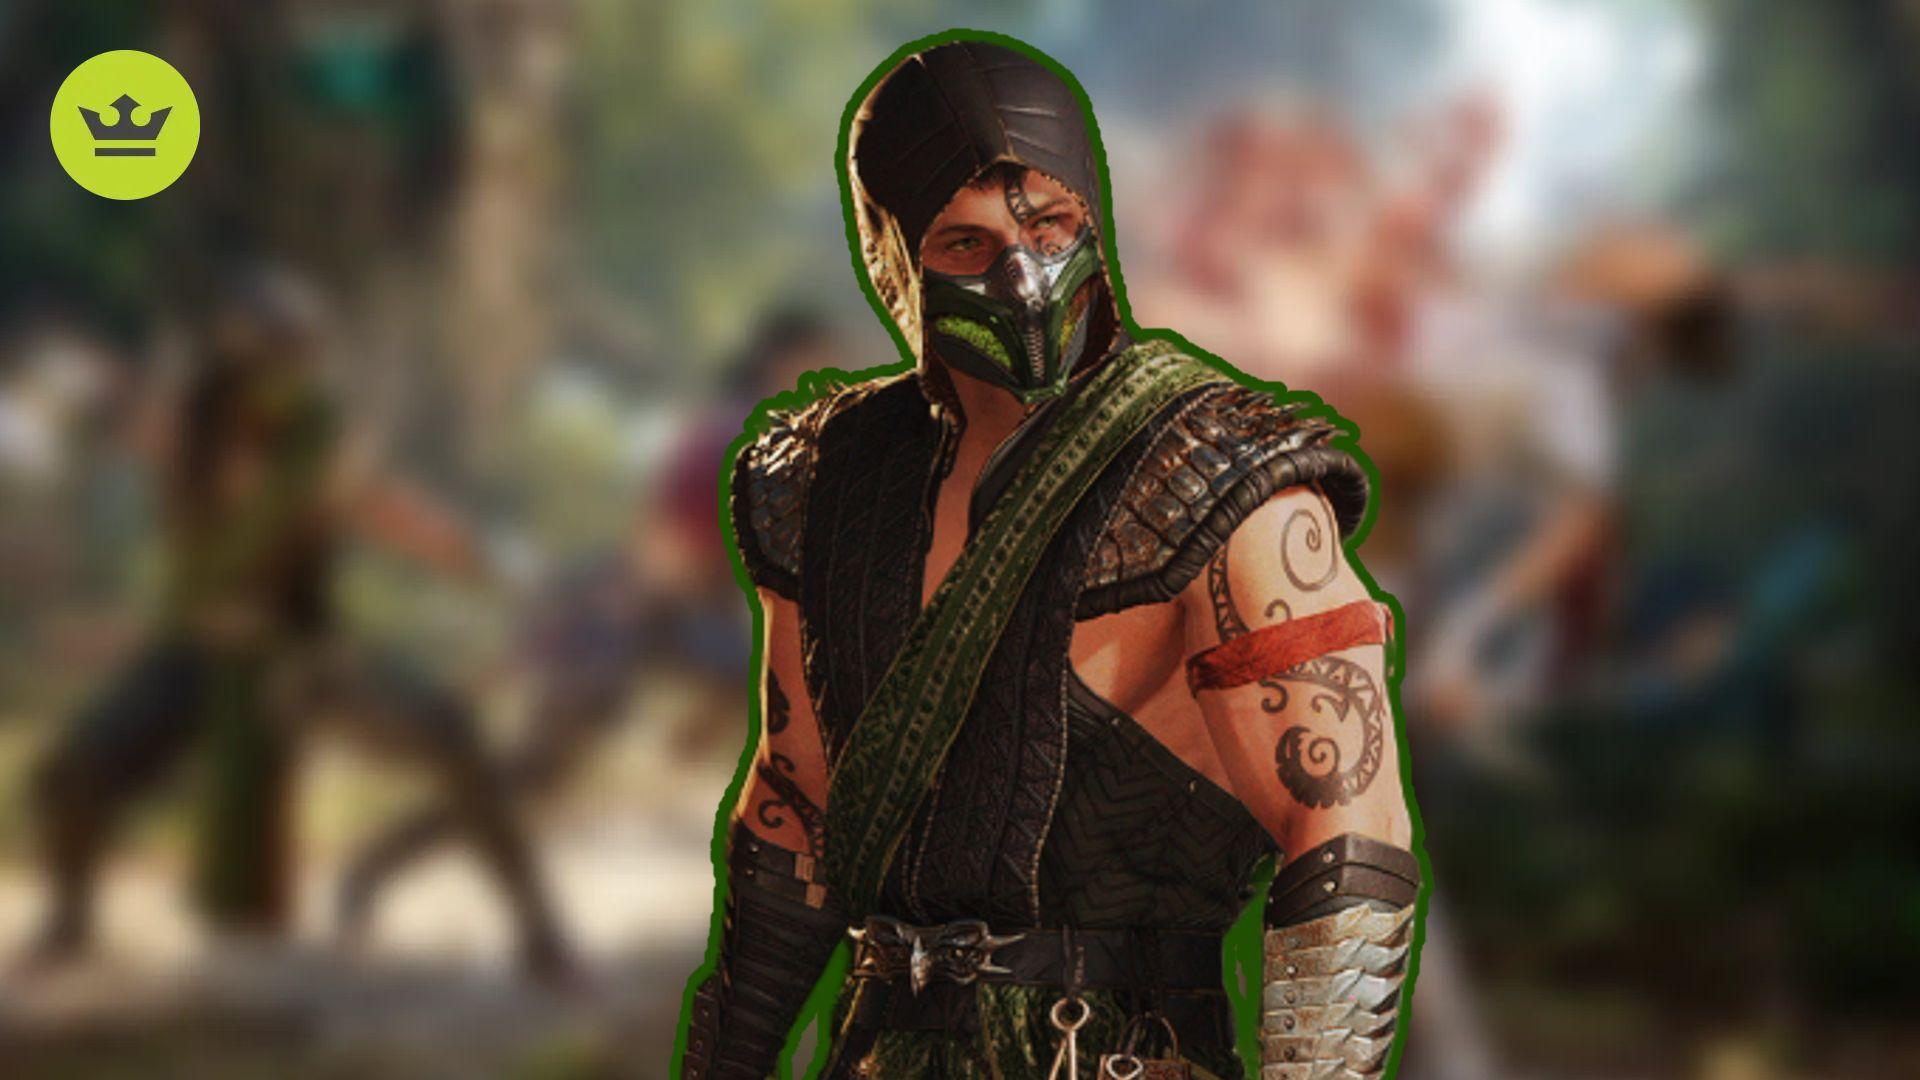 Mortal Kombat X tier list — best fighters ranked